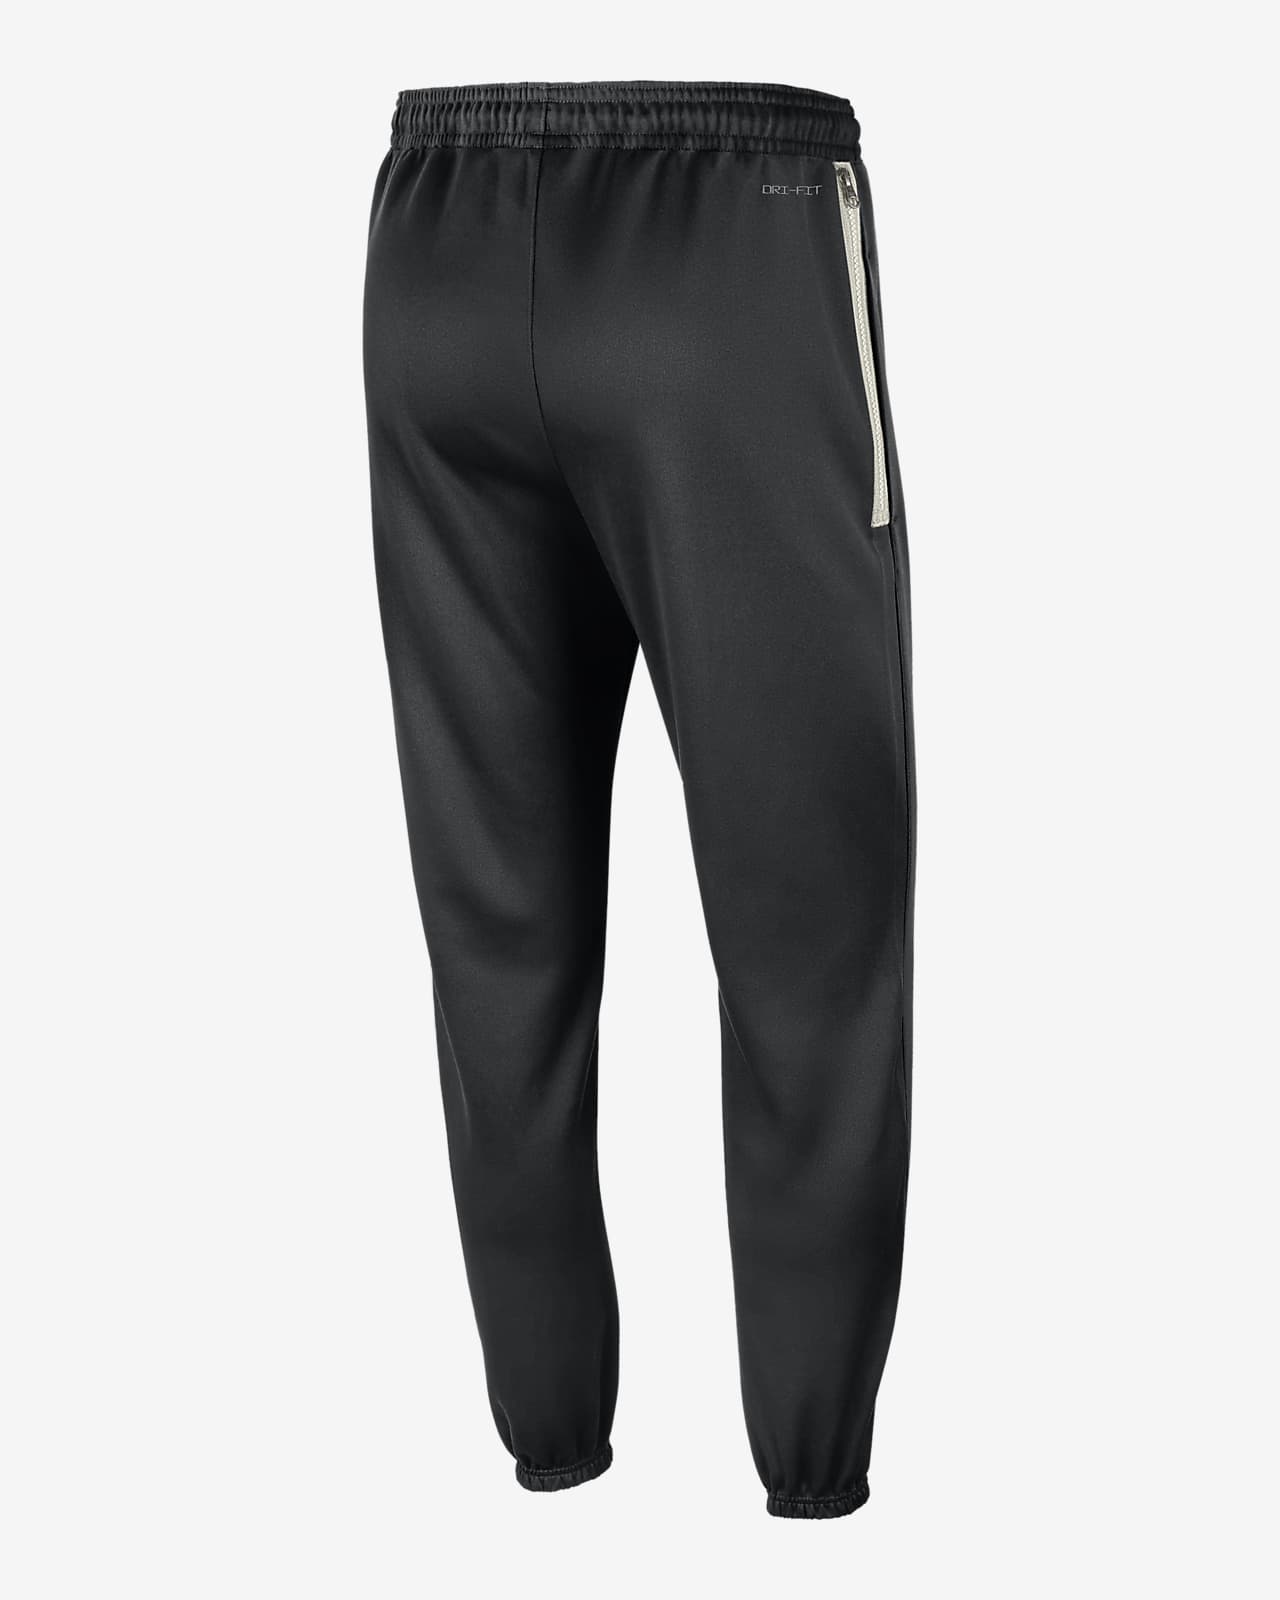 Nike Team 31 Dri-FIT NBA Pants Grey - MEDIUM ASH HTR/B85/PALE IVORY